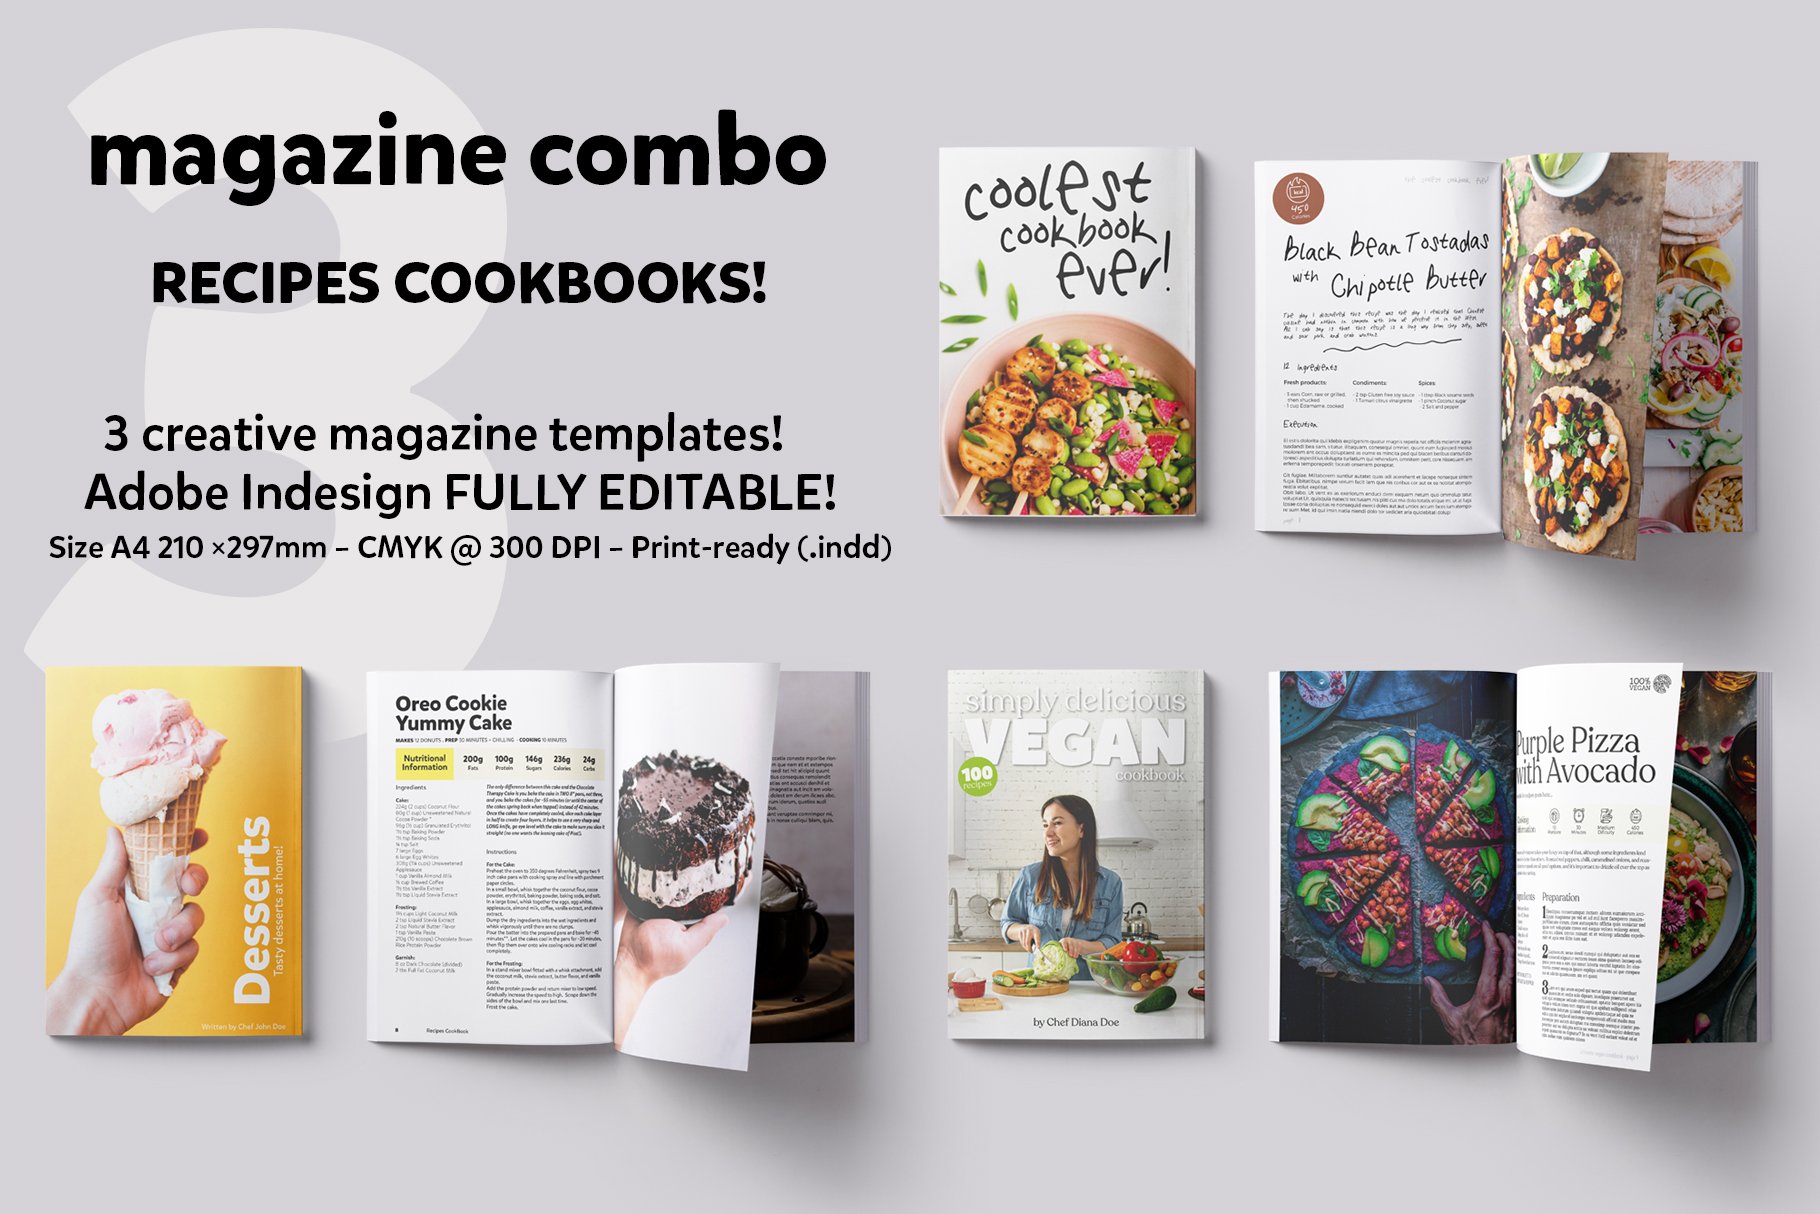 3 Magazines Recipes CookBooks Combo cover image.